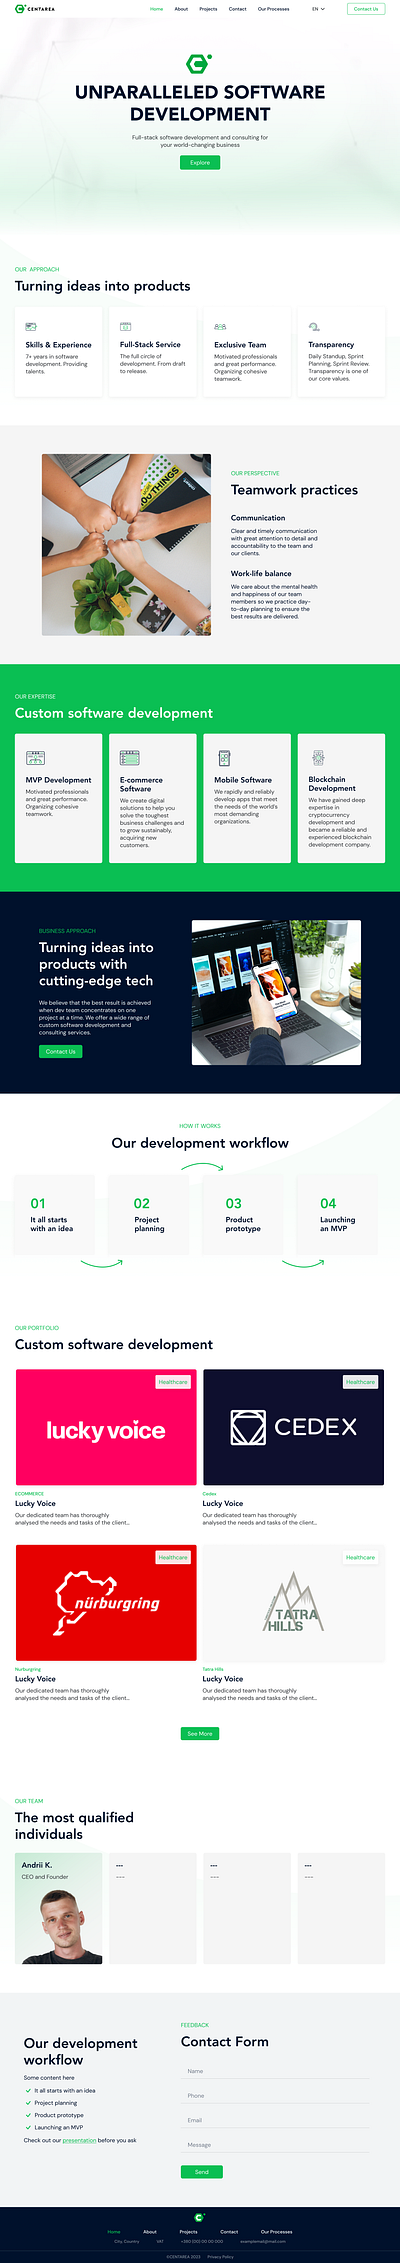 Software Development App Launching Soon app design development figma landing page reactjs software uiux